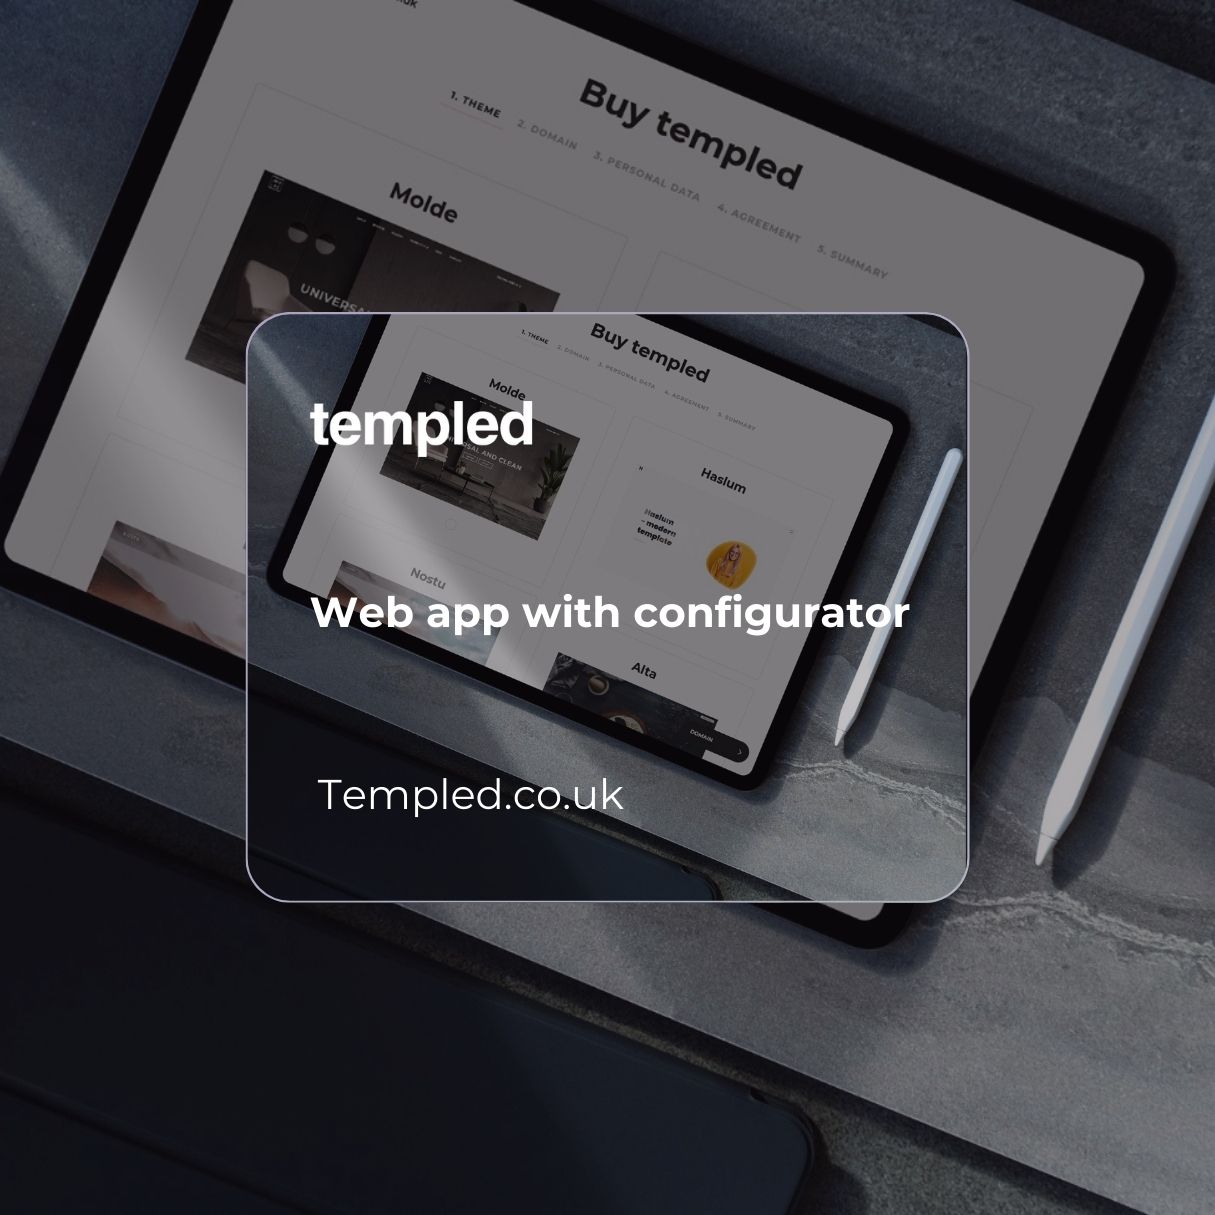 Templed.co.uk website